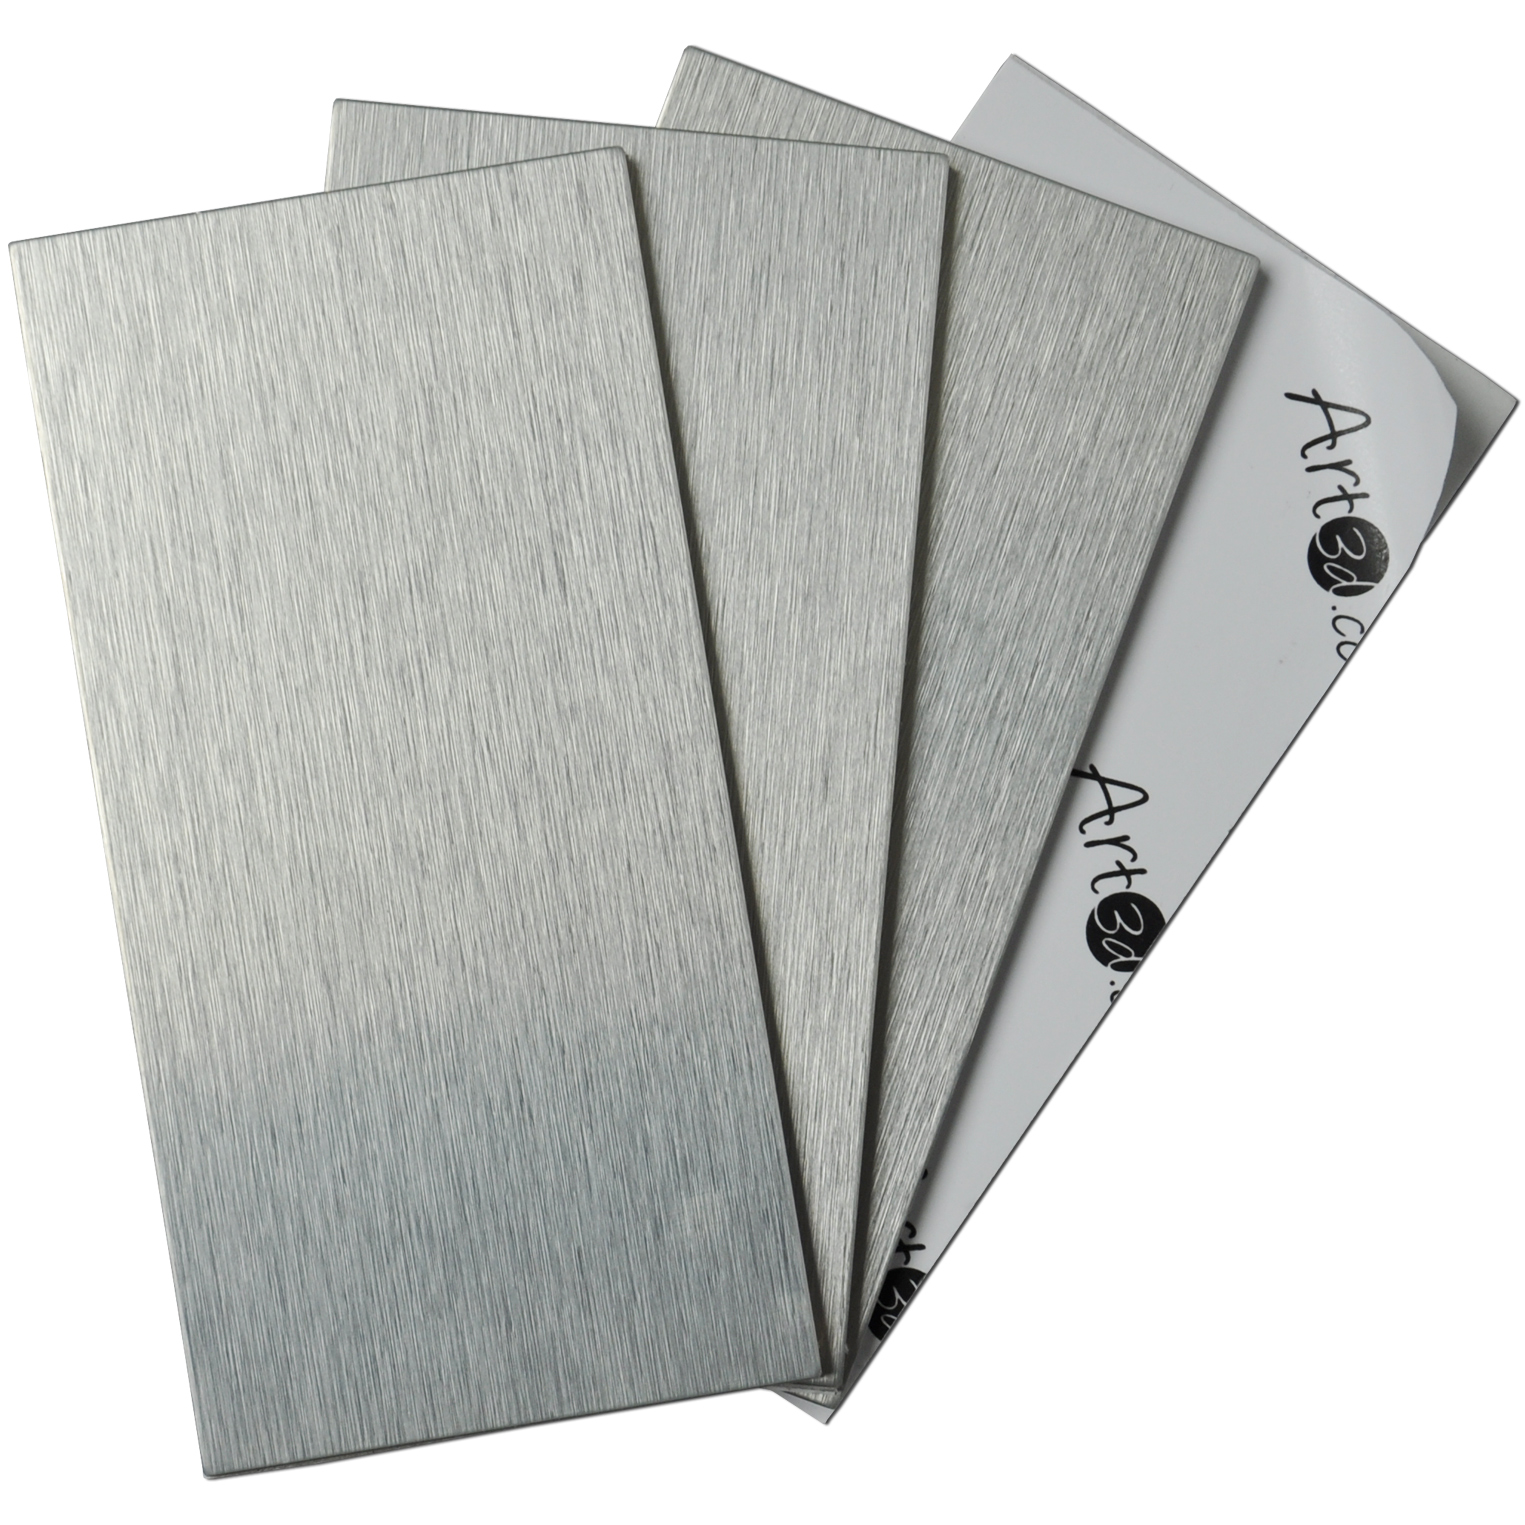 A16021P32 - 32-Pcs Peel and Stick Kitchen Backsplash, Adhesive Metal Tiles for Wall, 3